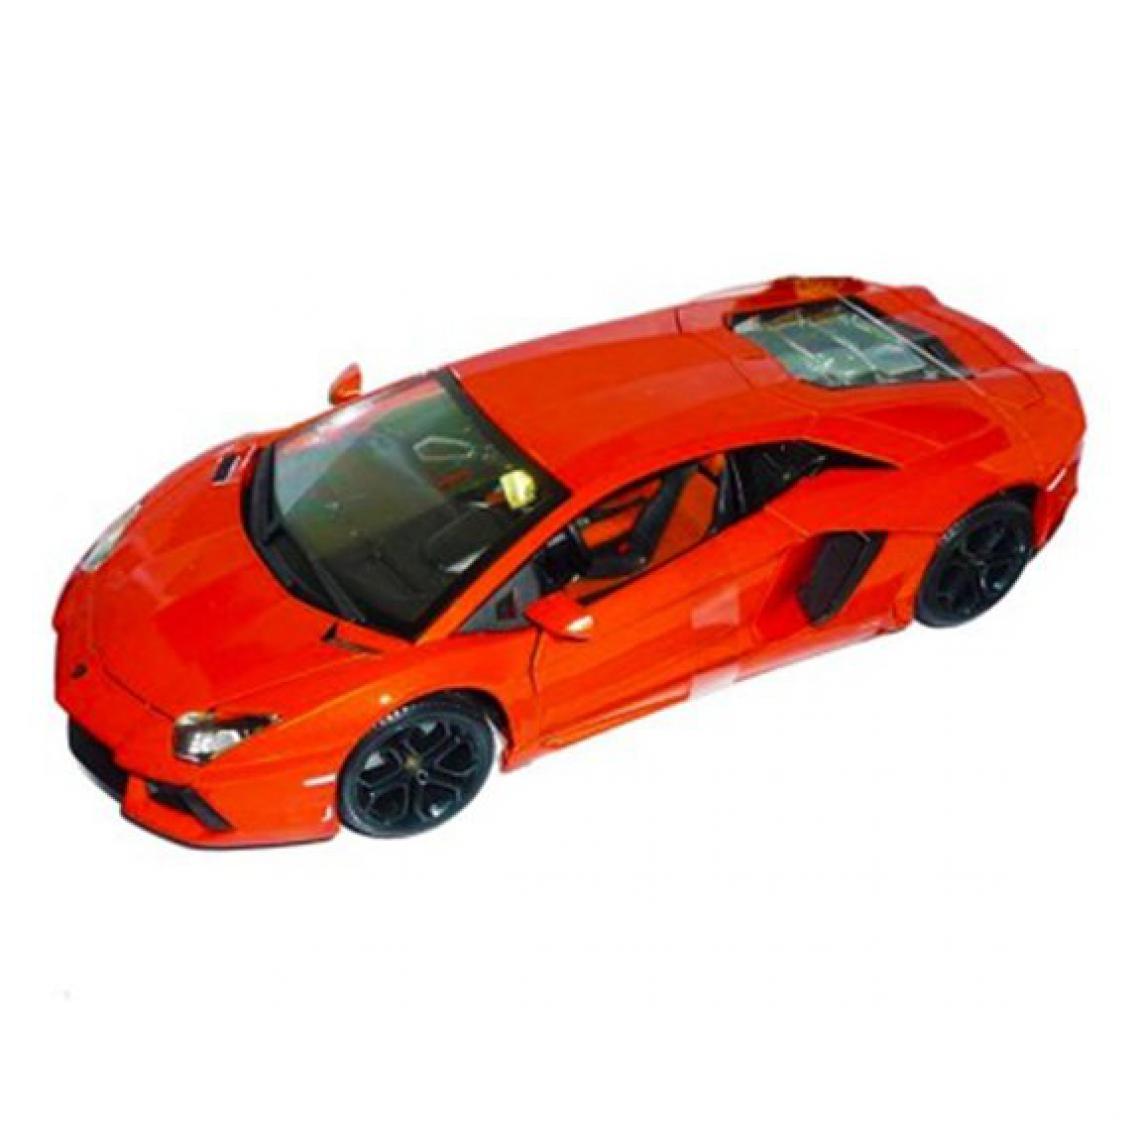 Ludendo - Lamborghini Reventon orange Collection Diamond - Echelle 1/18 - Voitures